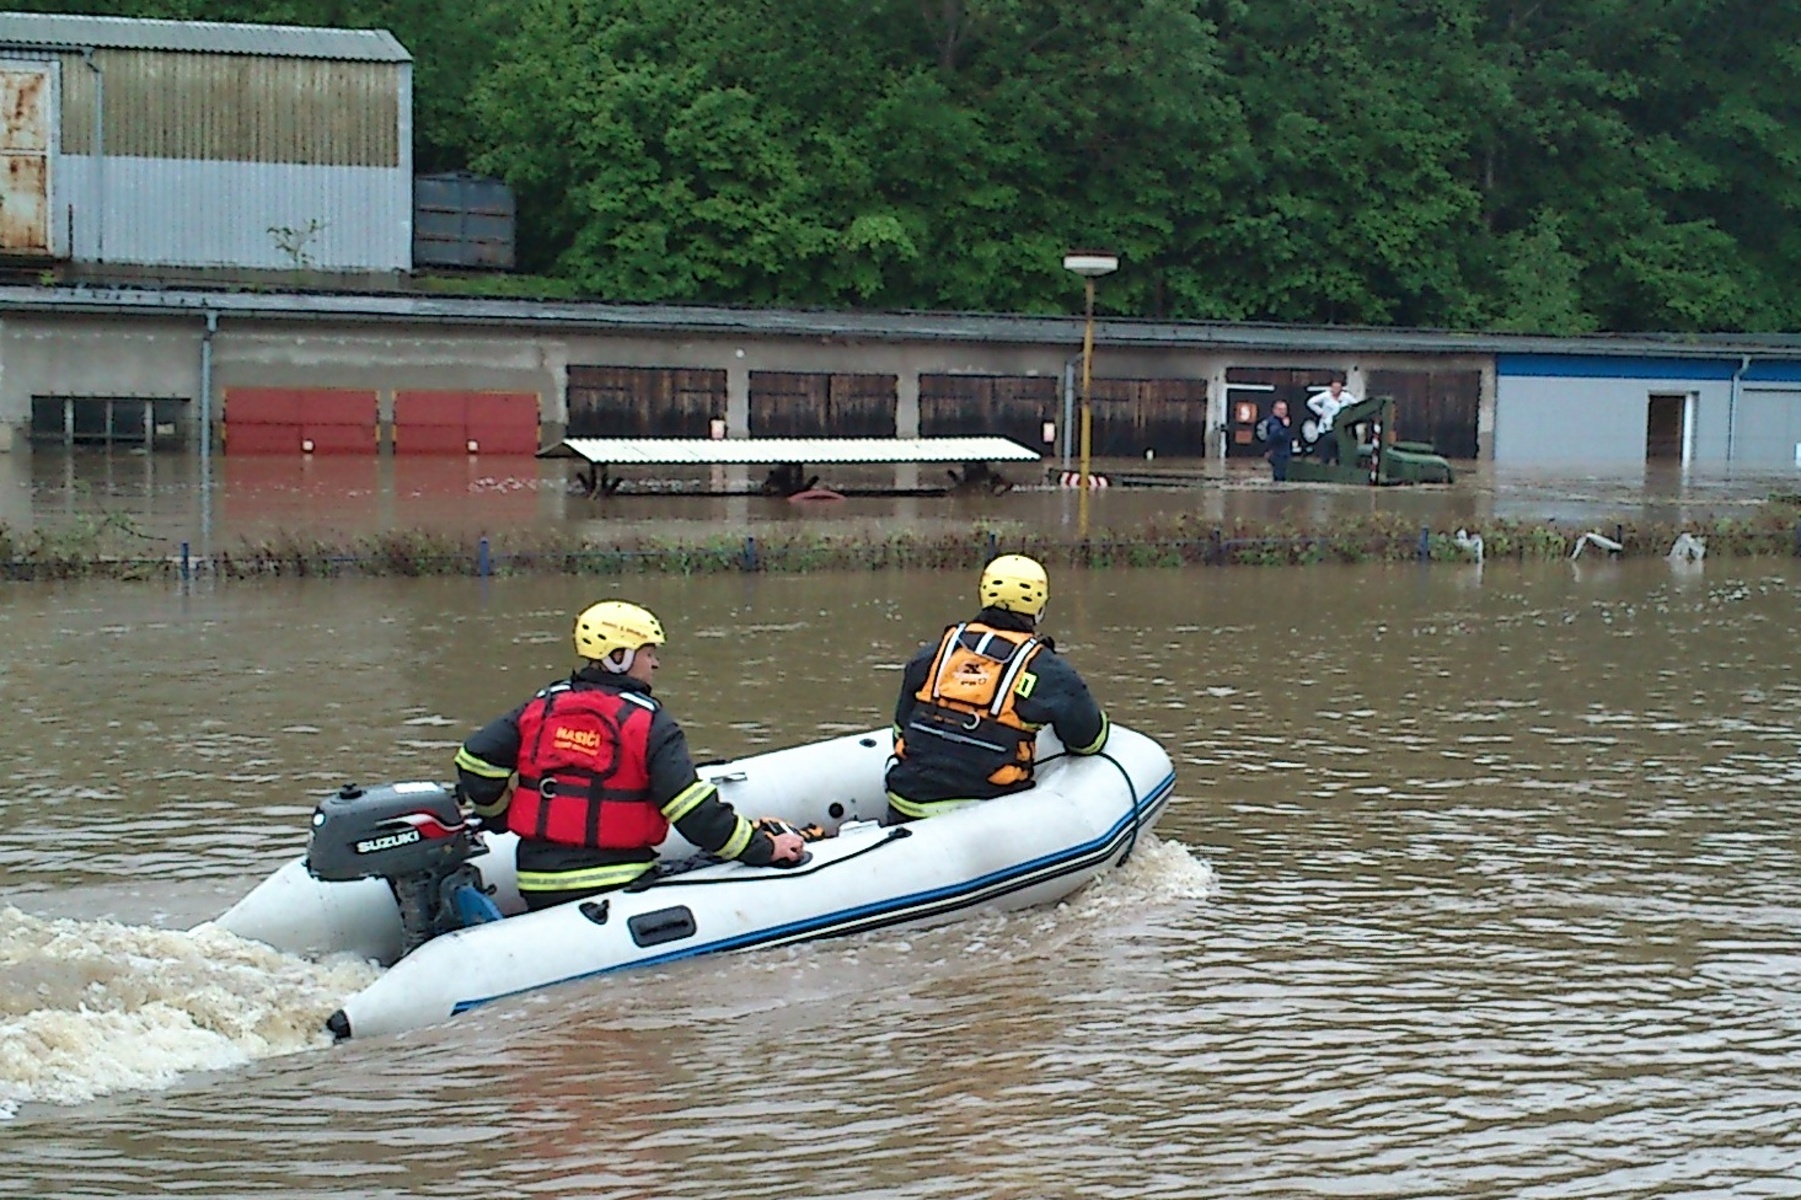 2 Záchrana čtyř osob ze zaplaveného auta, Český Krumlov - 2. 6. 2013 (2).jpg